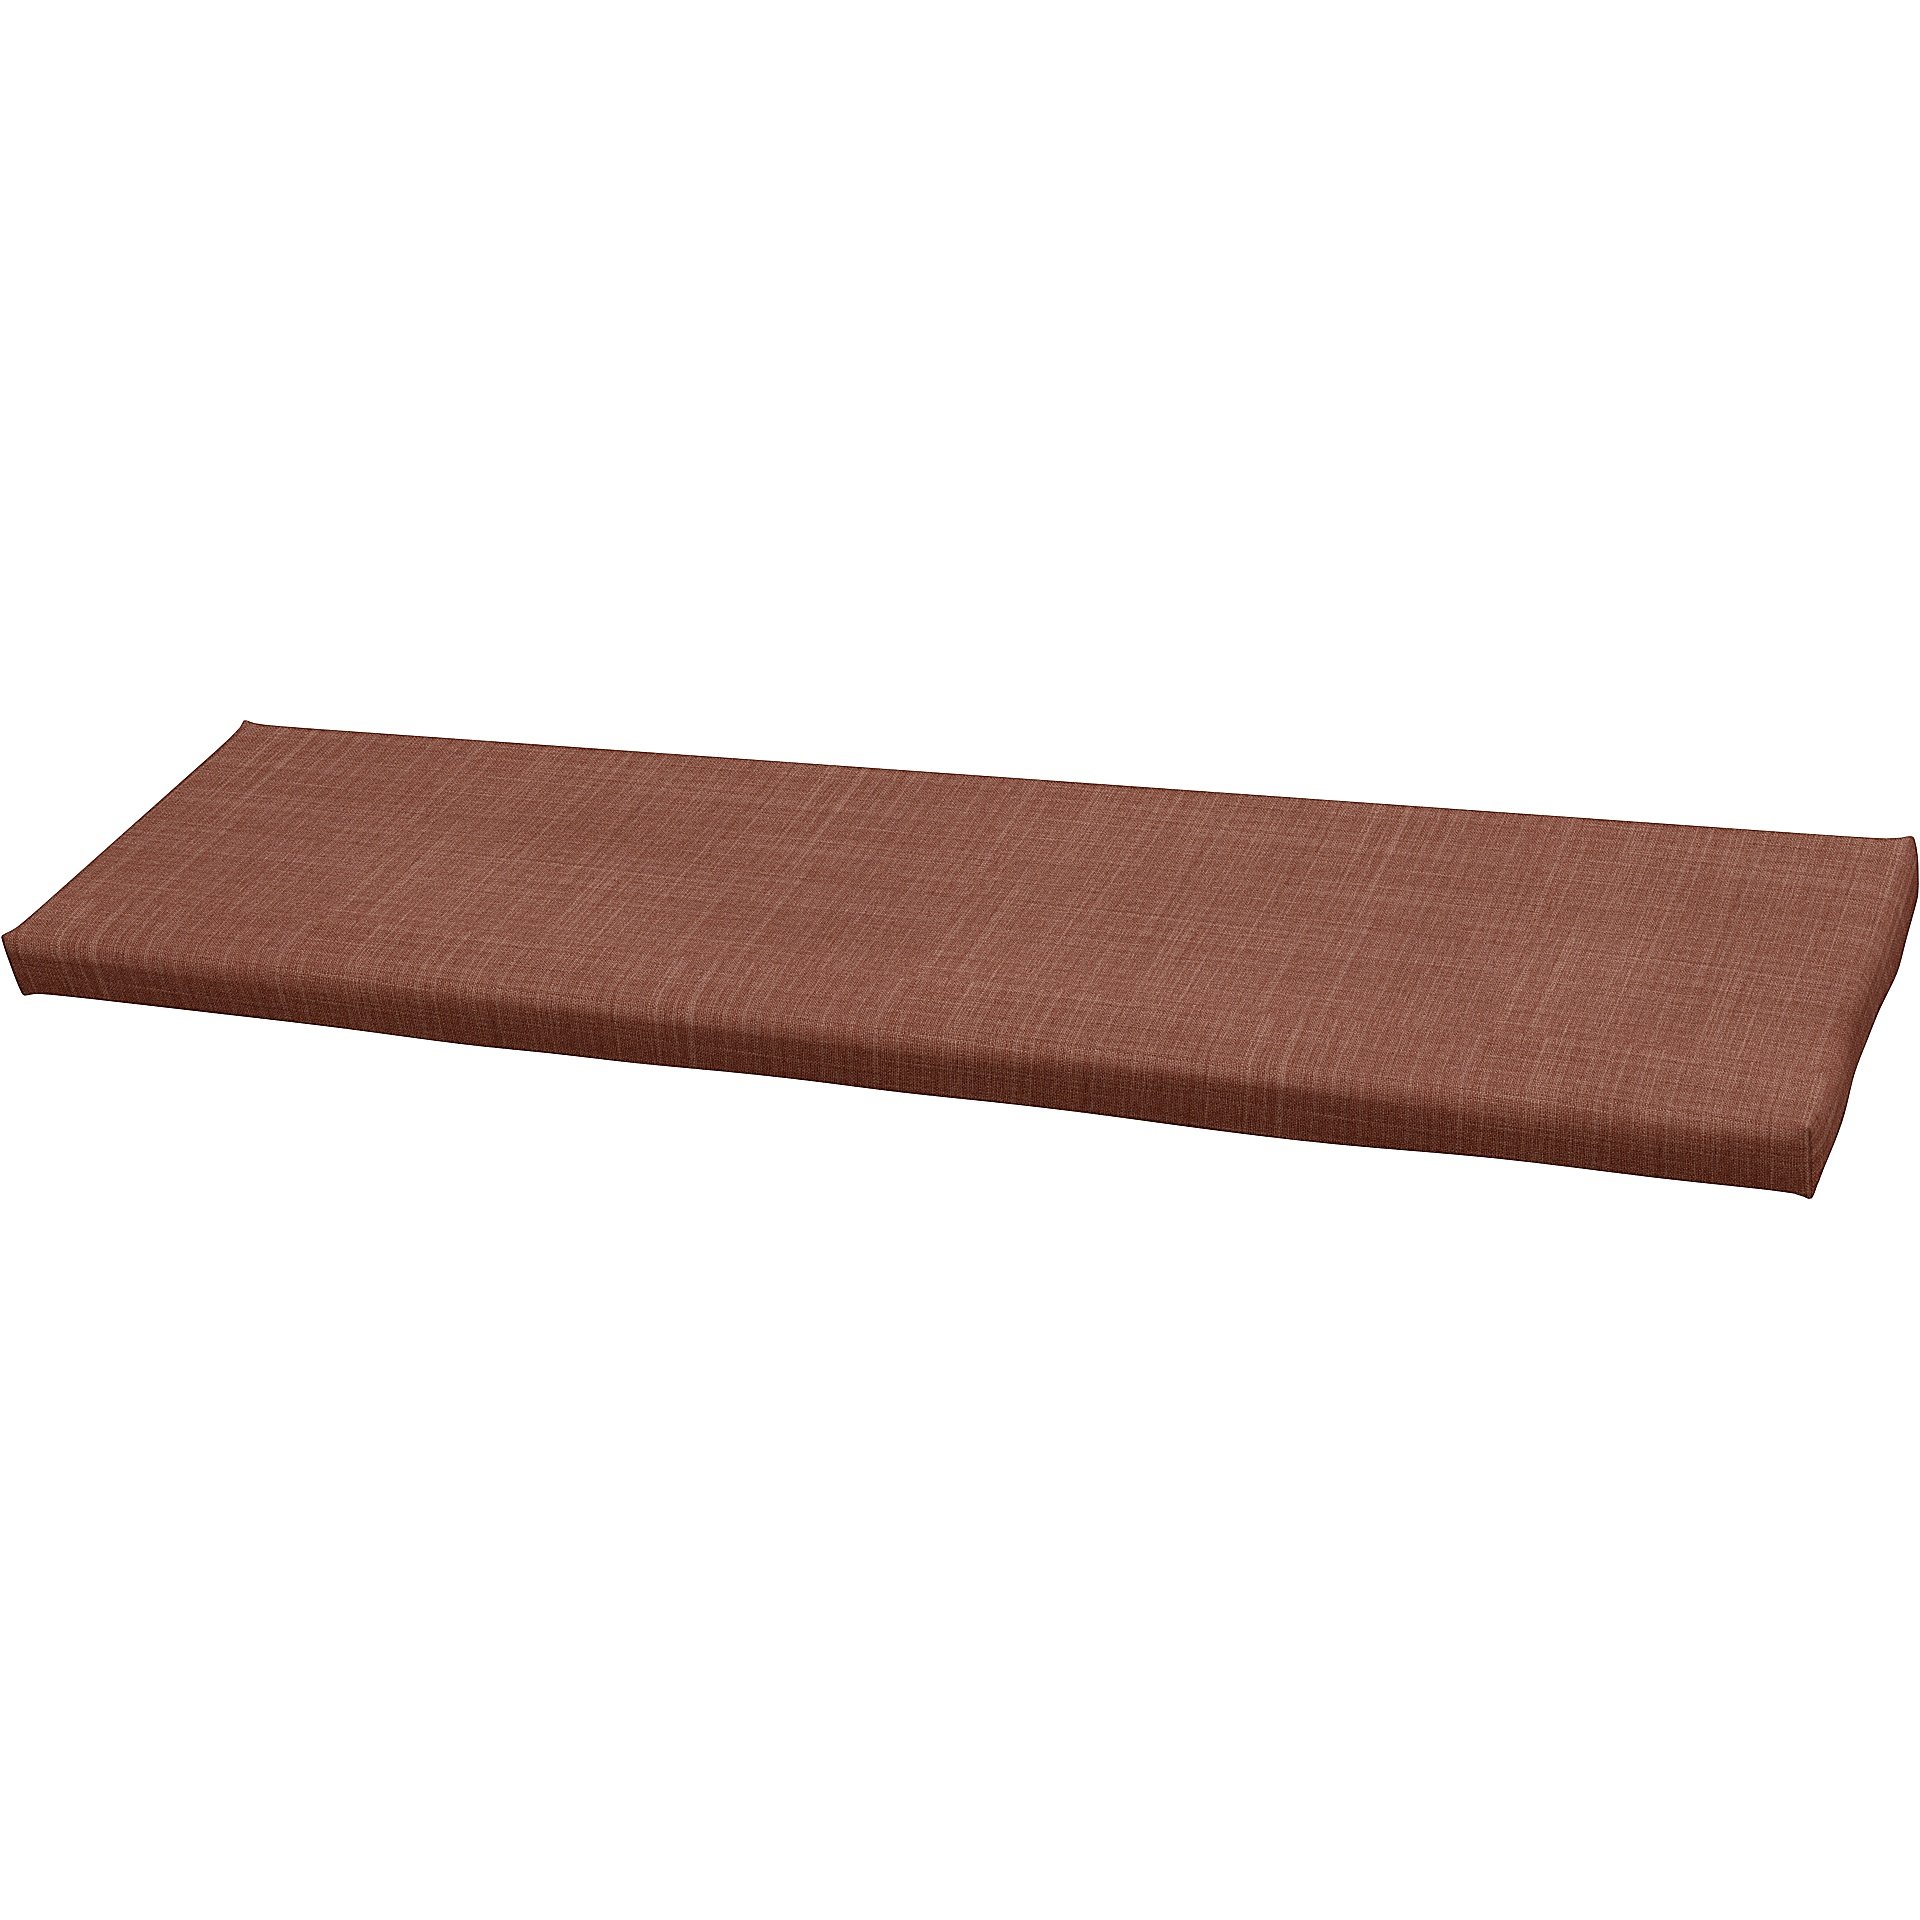 IKEA - Universal bench cushion cover 120x35x3,5 cm, Rust, Boucle & Texture - Bemz